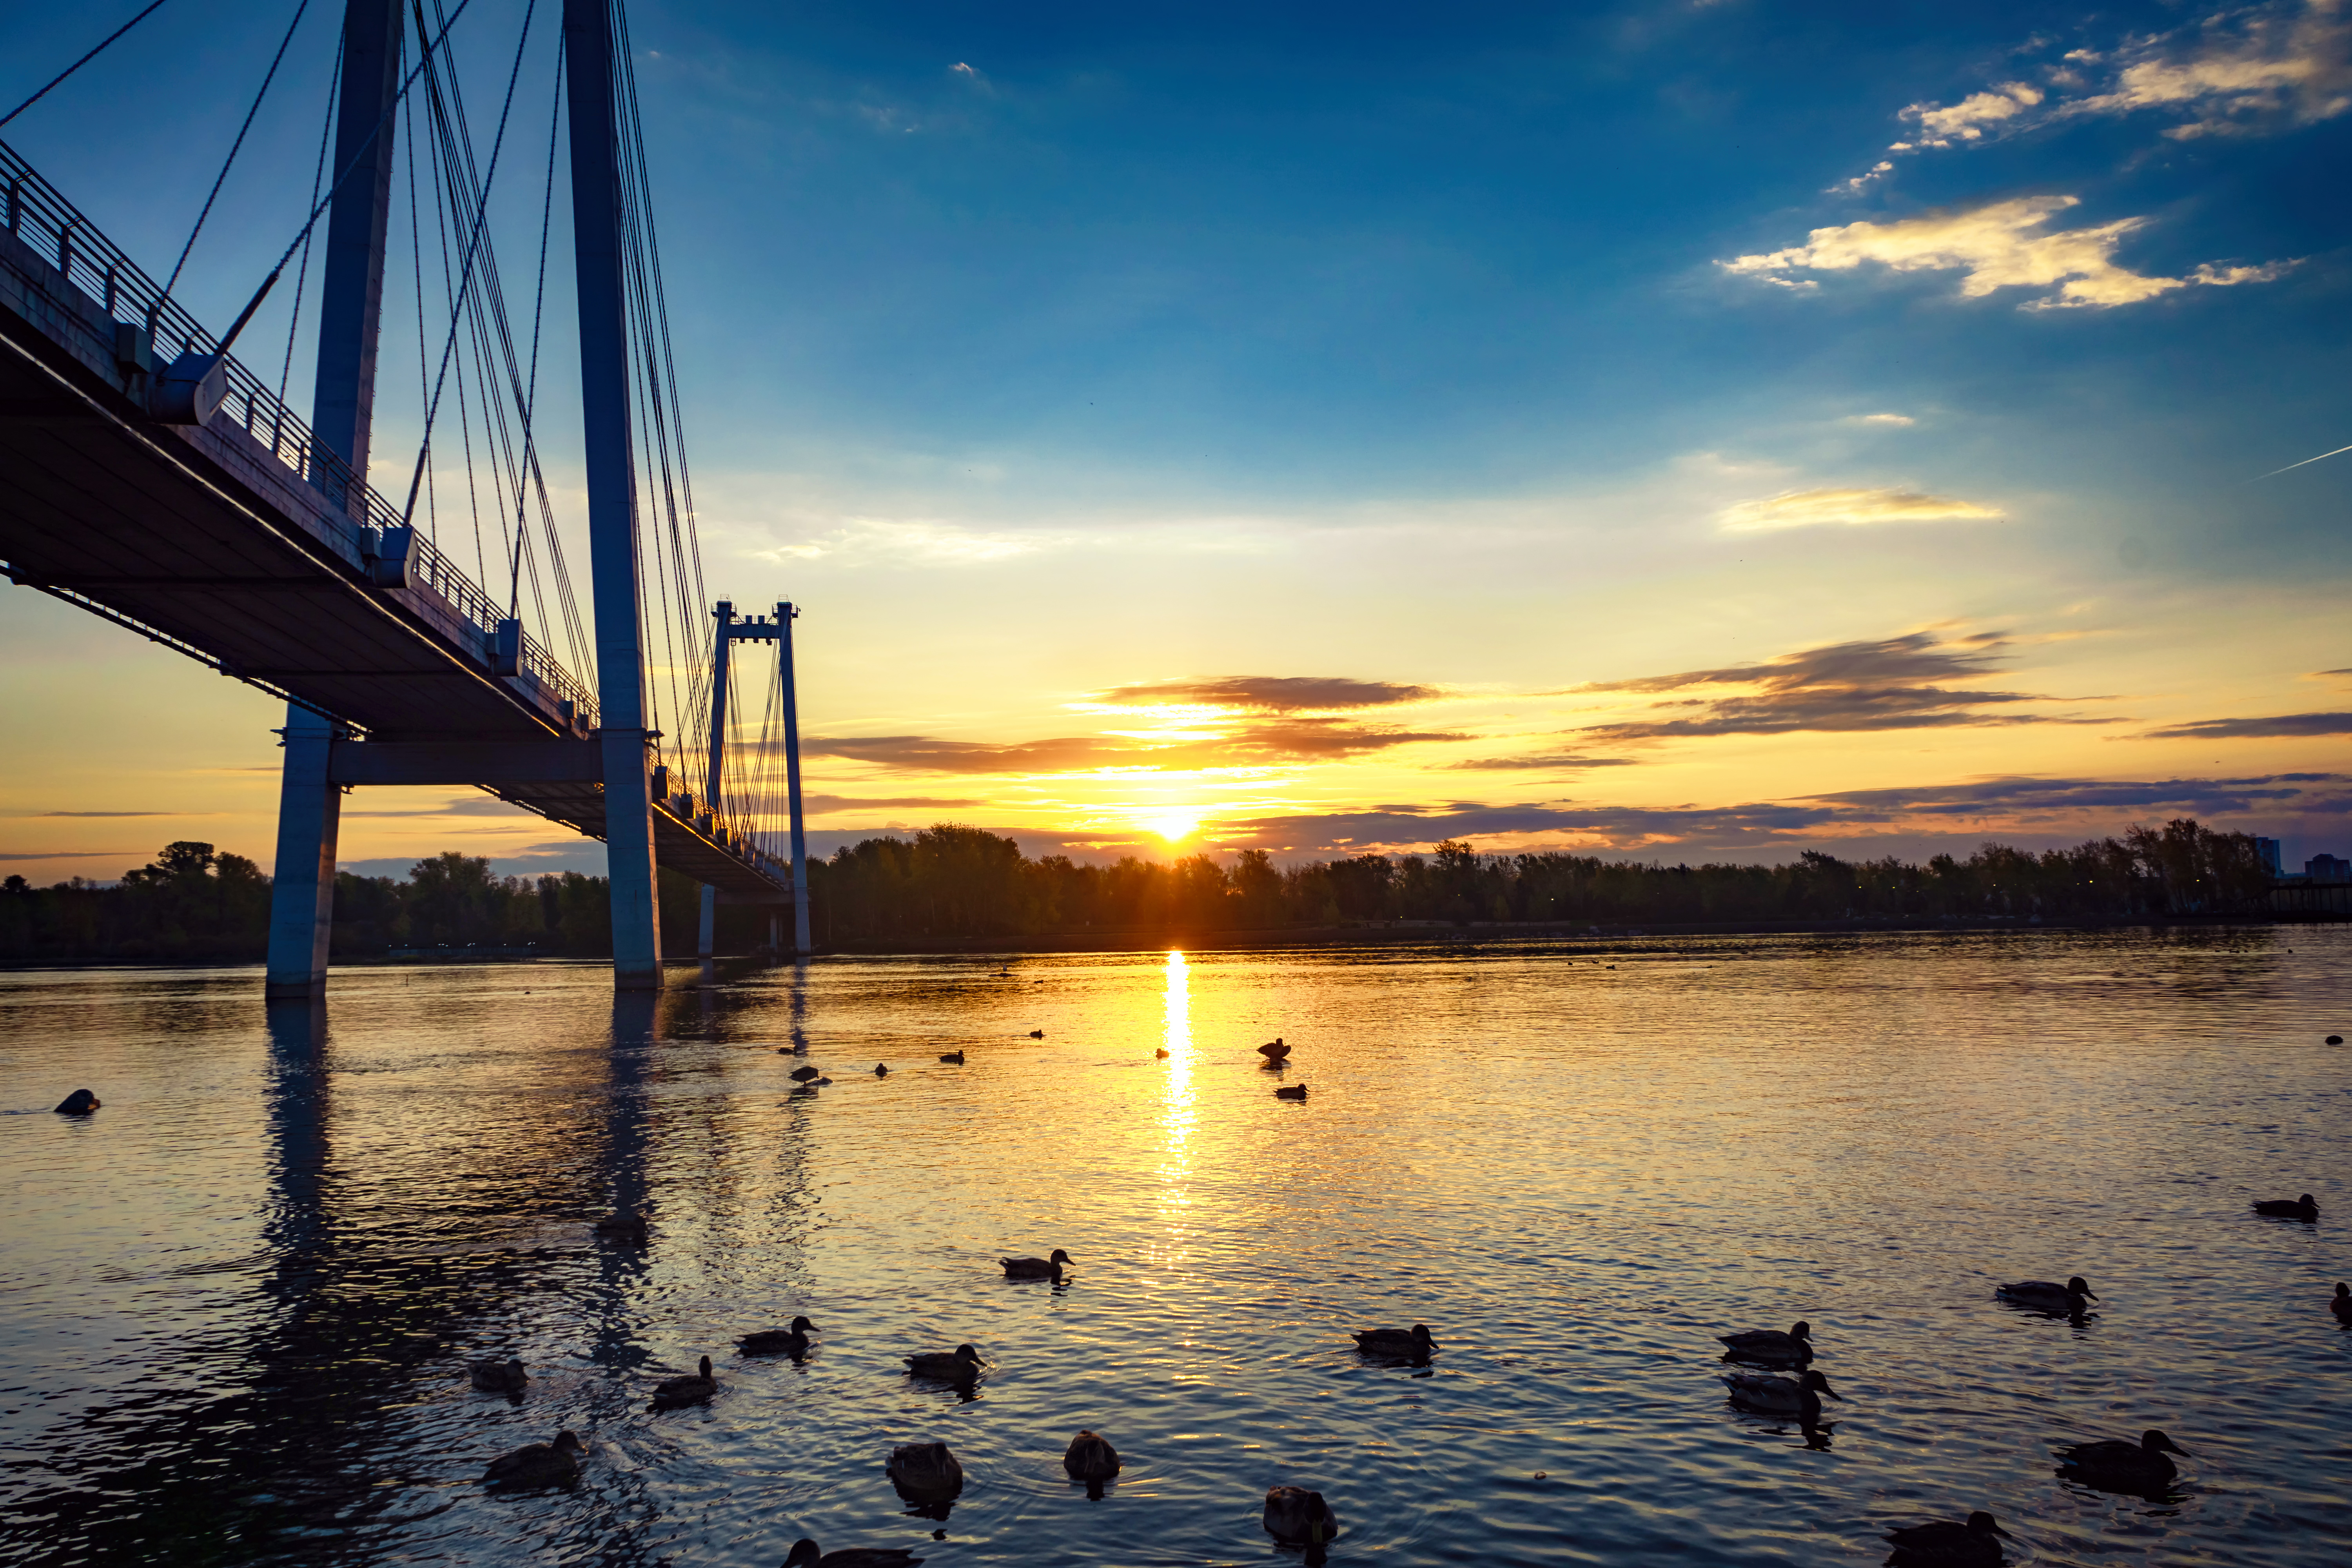 Ducks swim under a bridge over a river during sunrise